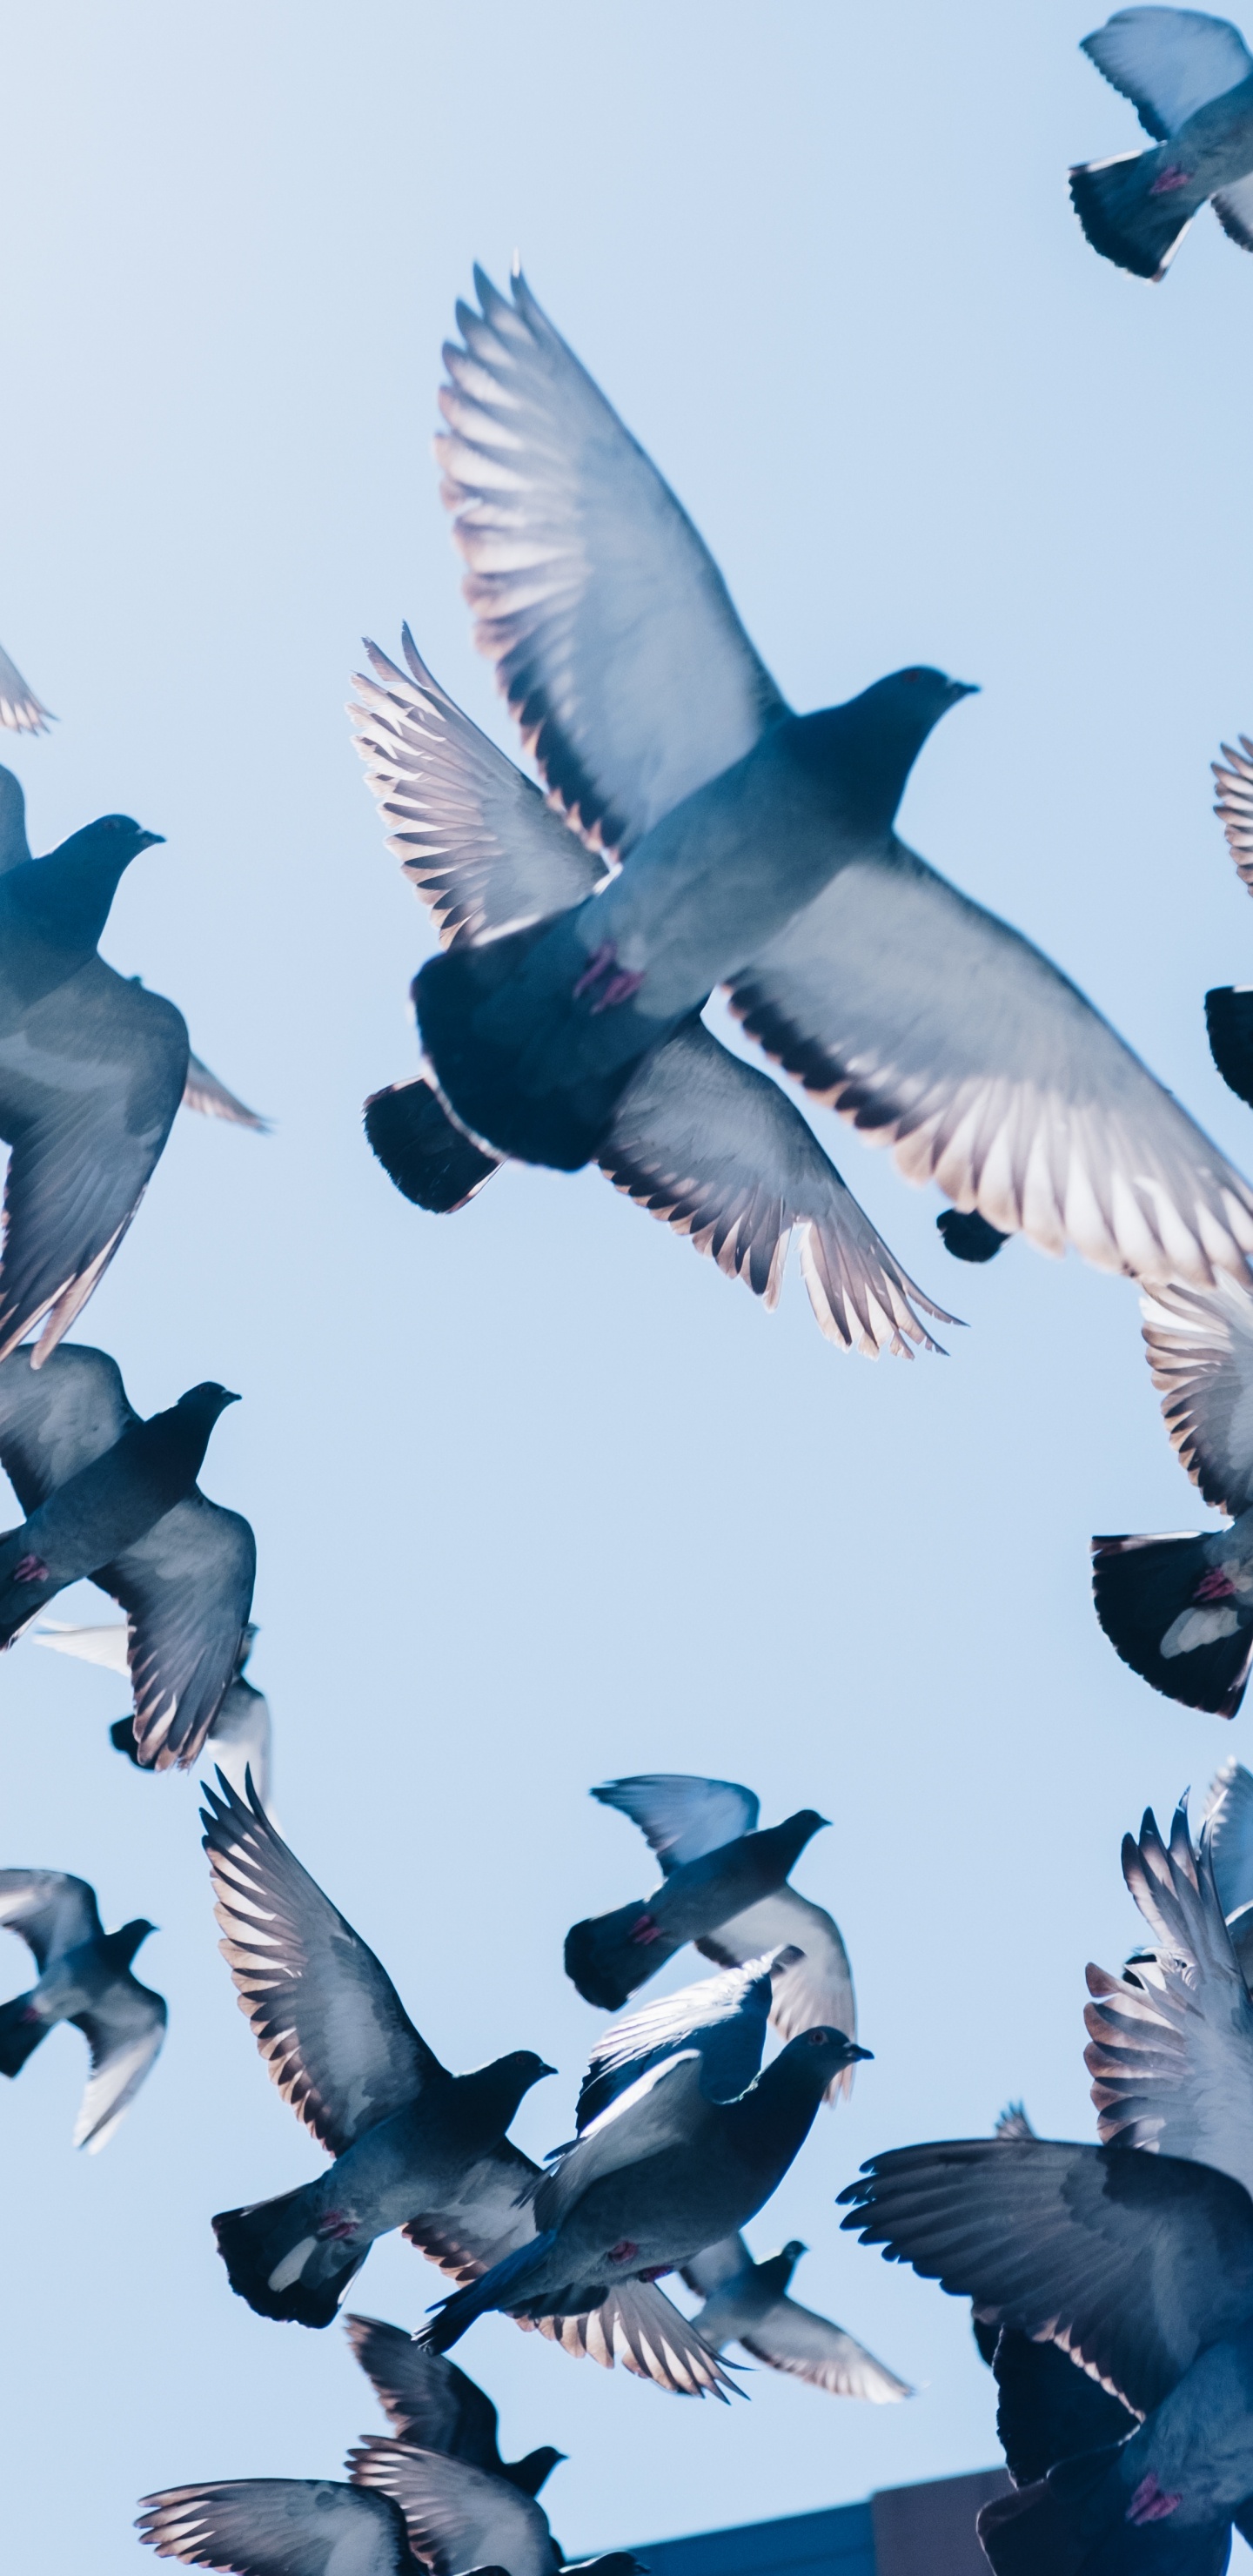 Flock of Birds Flying Under Blue Sky During Daytime. Wallpaper in 1440x2960 Resolution